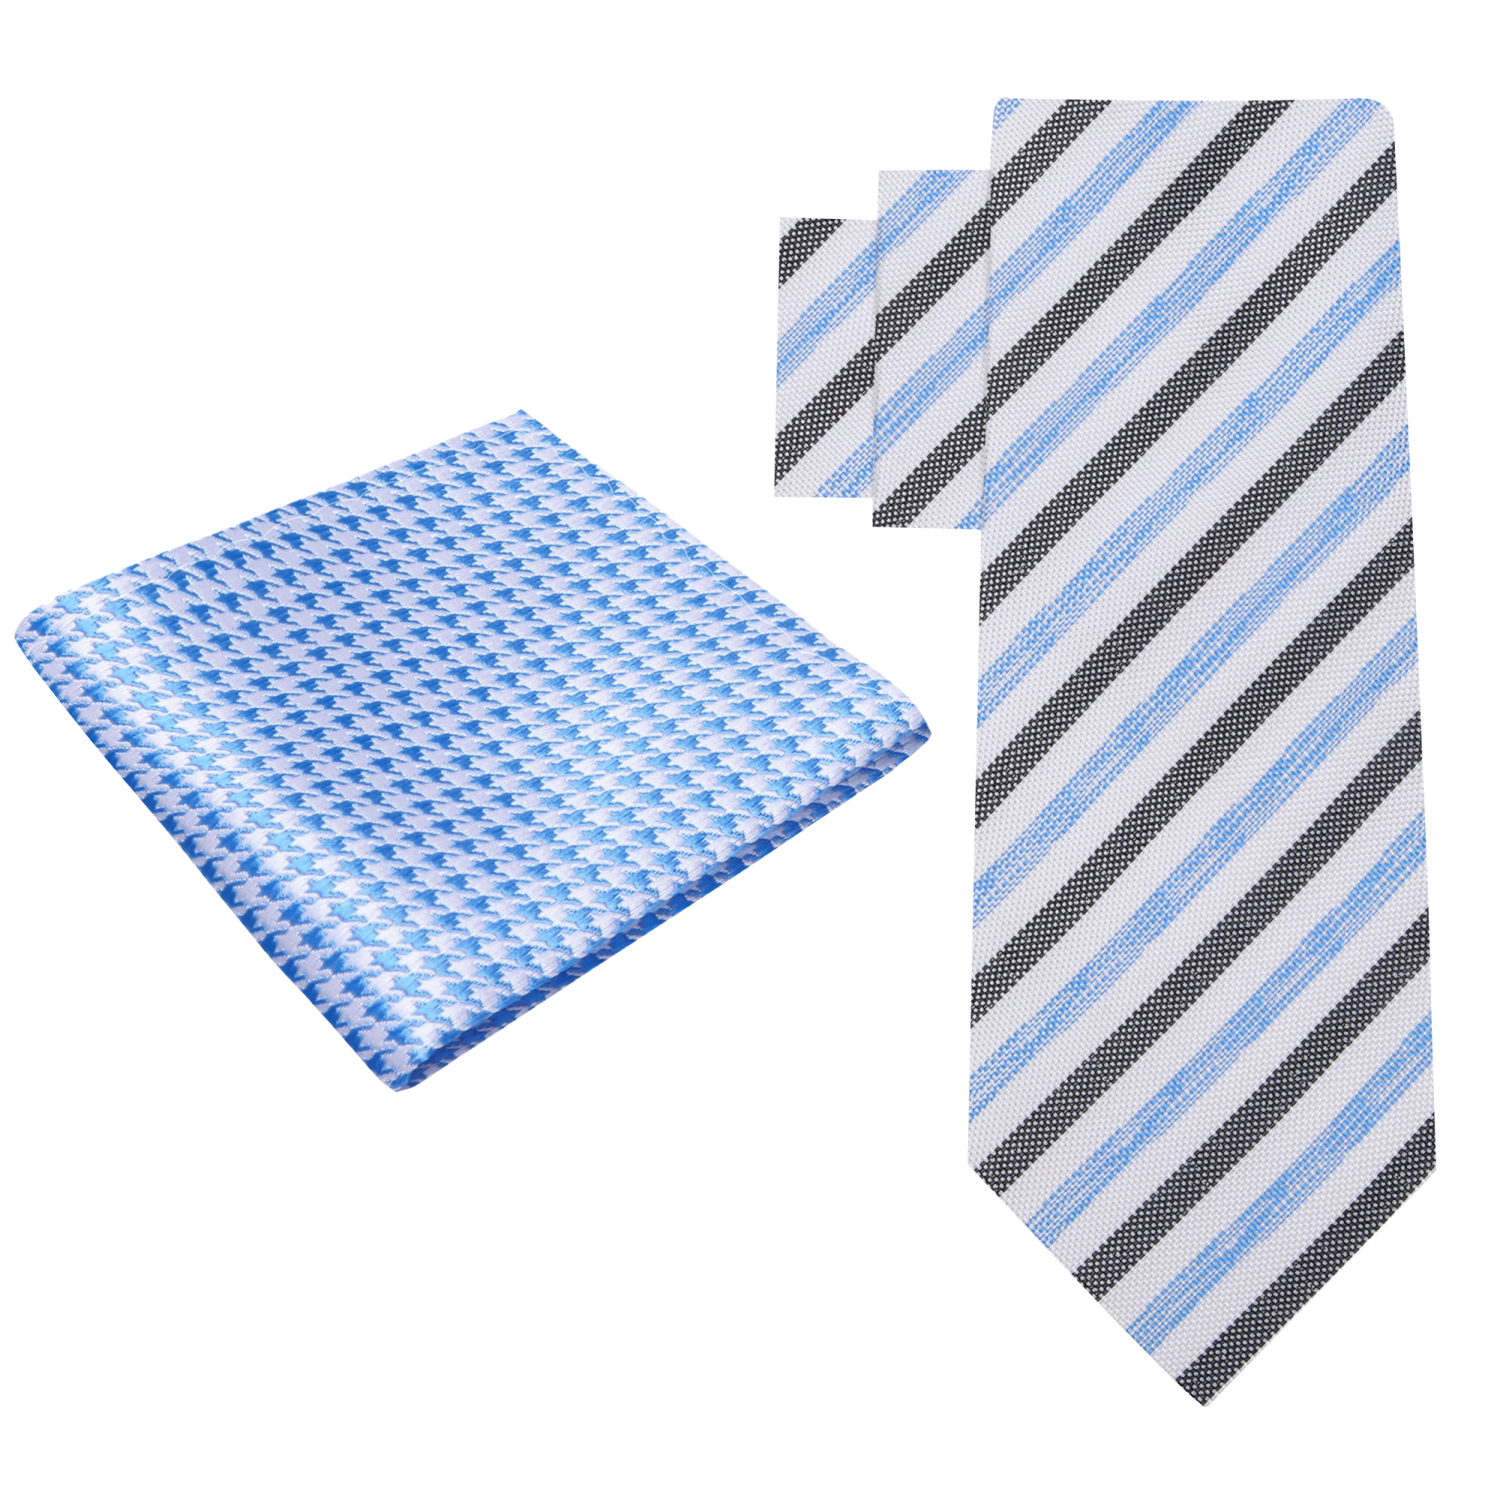 White, Blue, Black Stripe Necktie and Accenting Square View 2